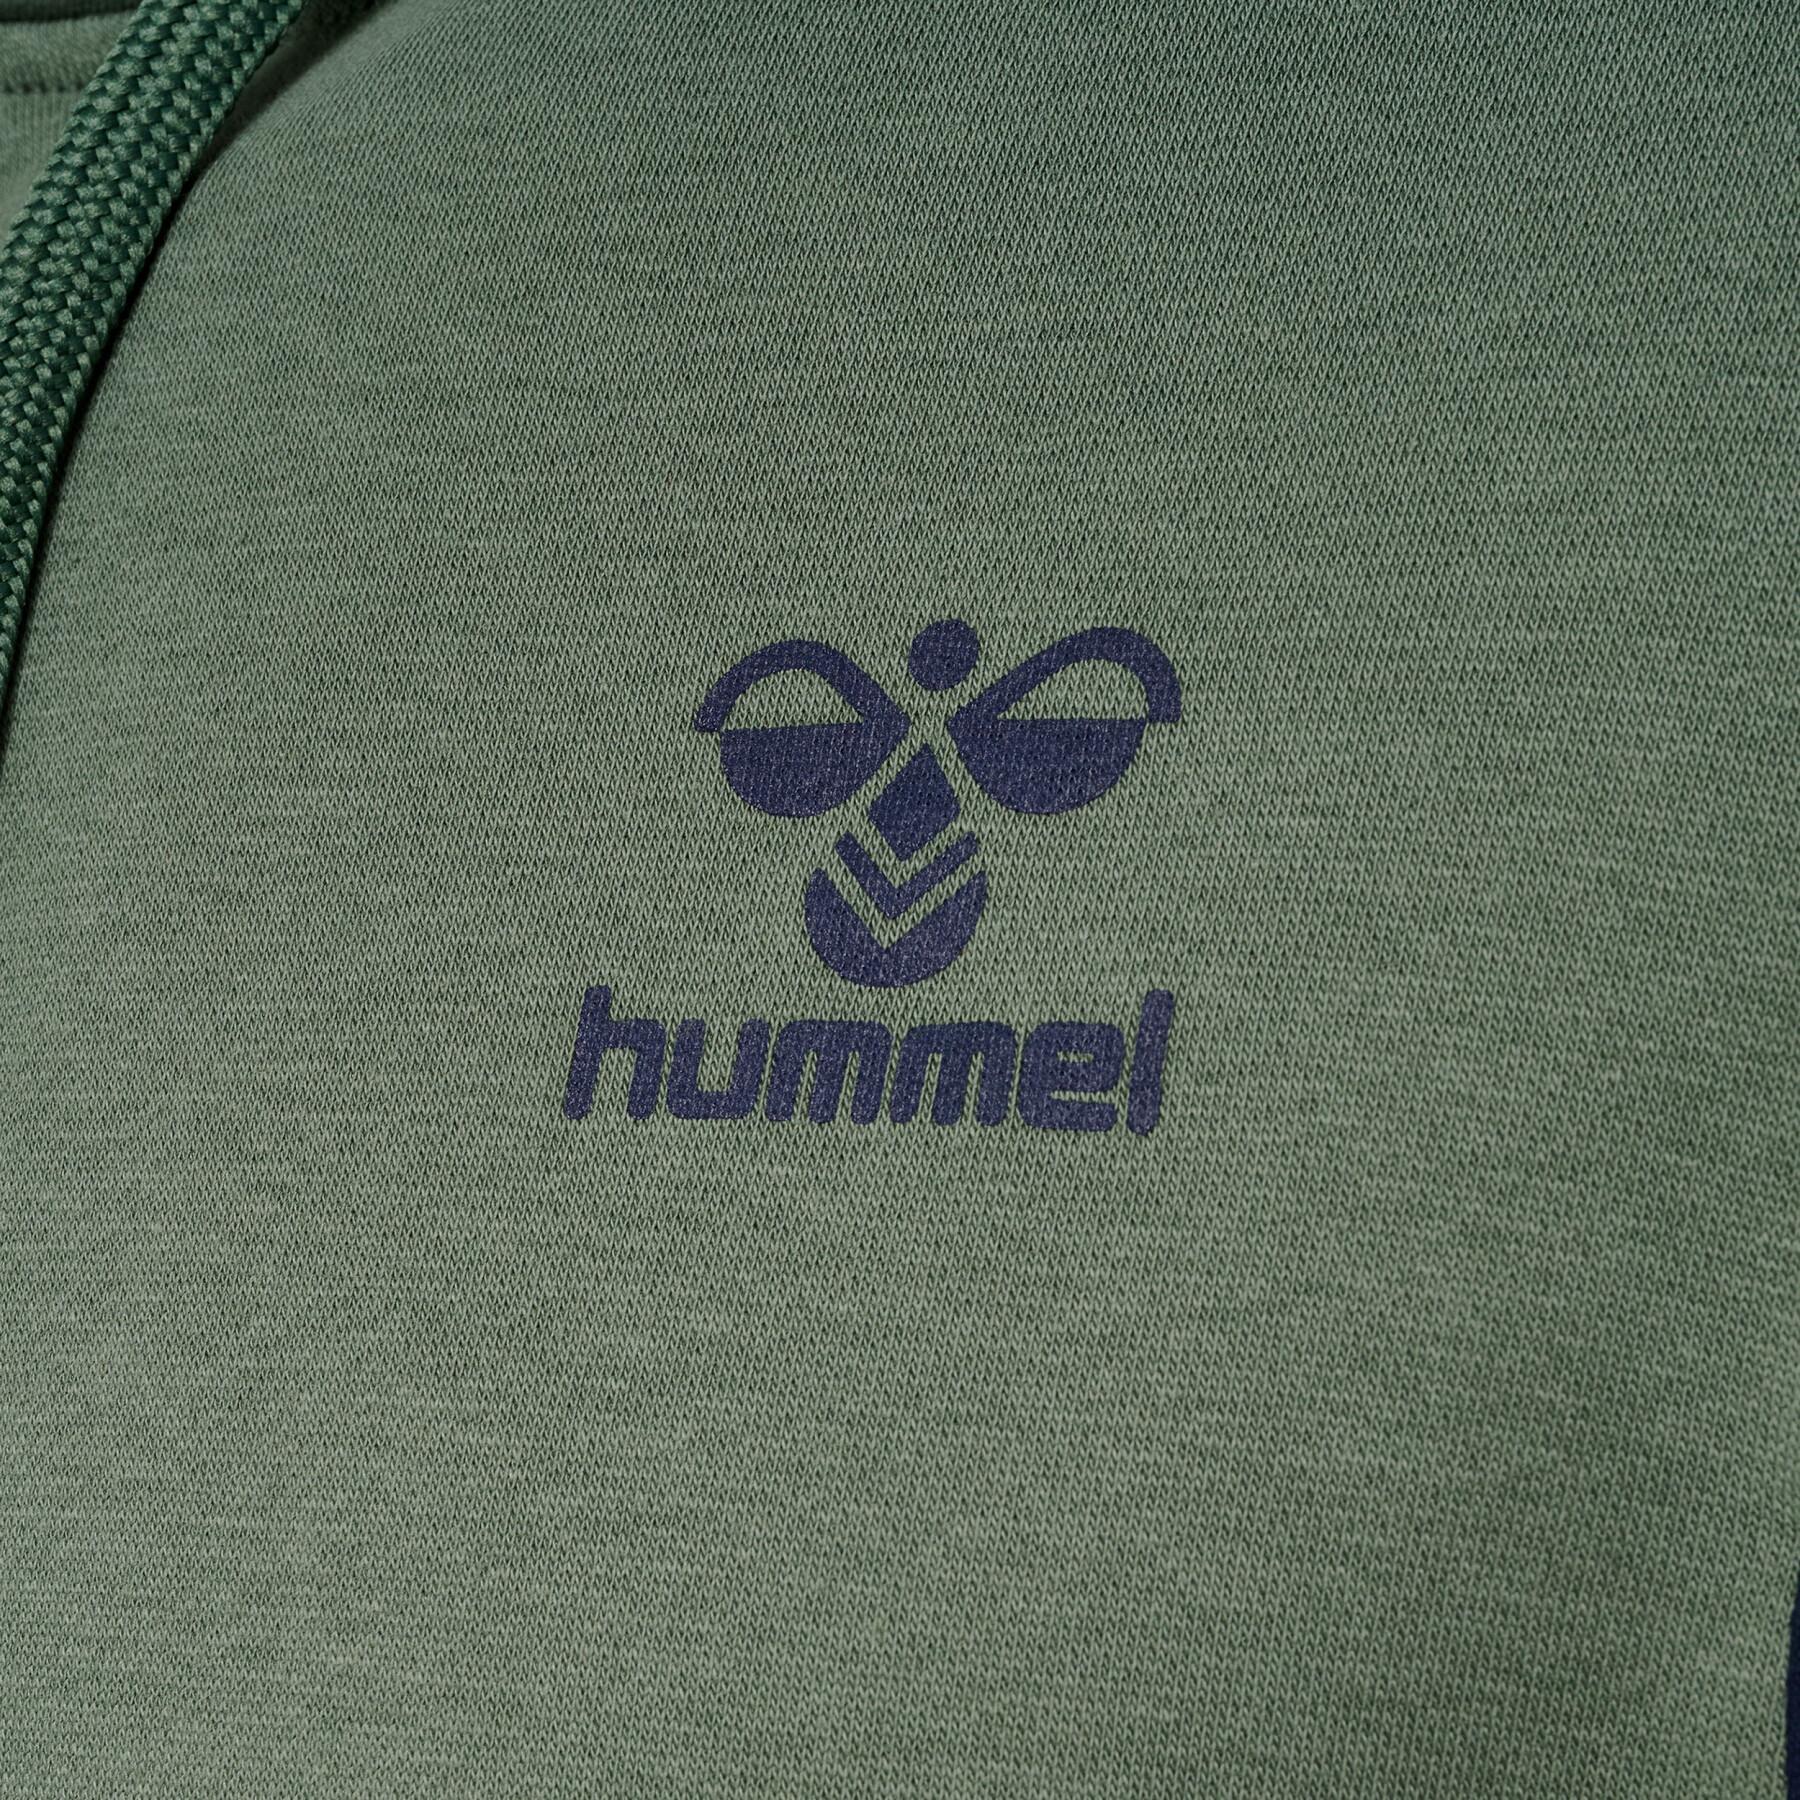 Sweatshirt cotton hoodie Hummel HmlStaltic